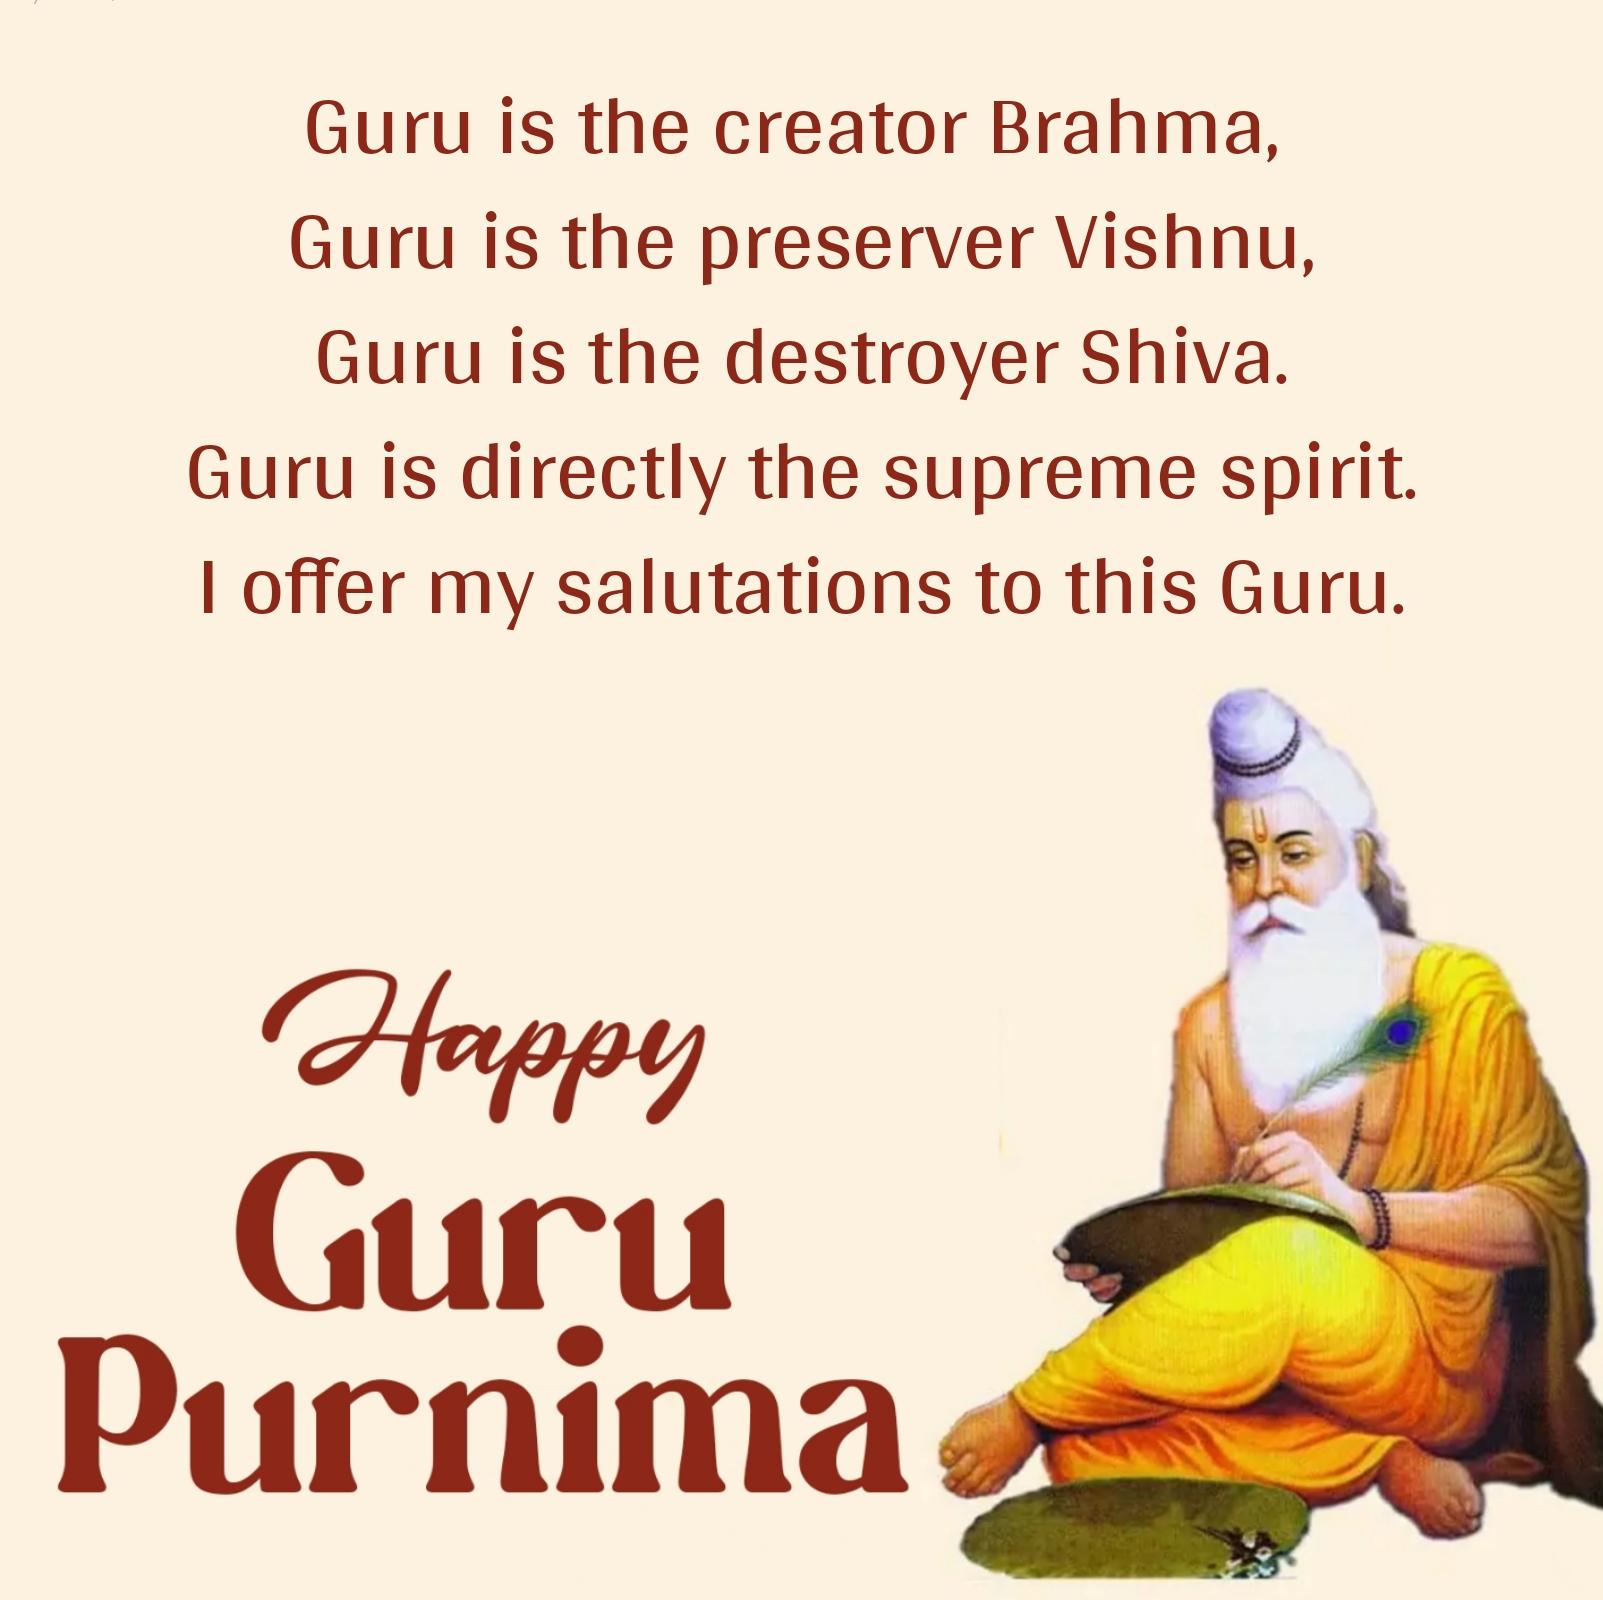 Guru is the creator Brahma Guru is the preserver Vishnu